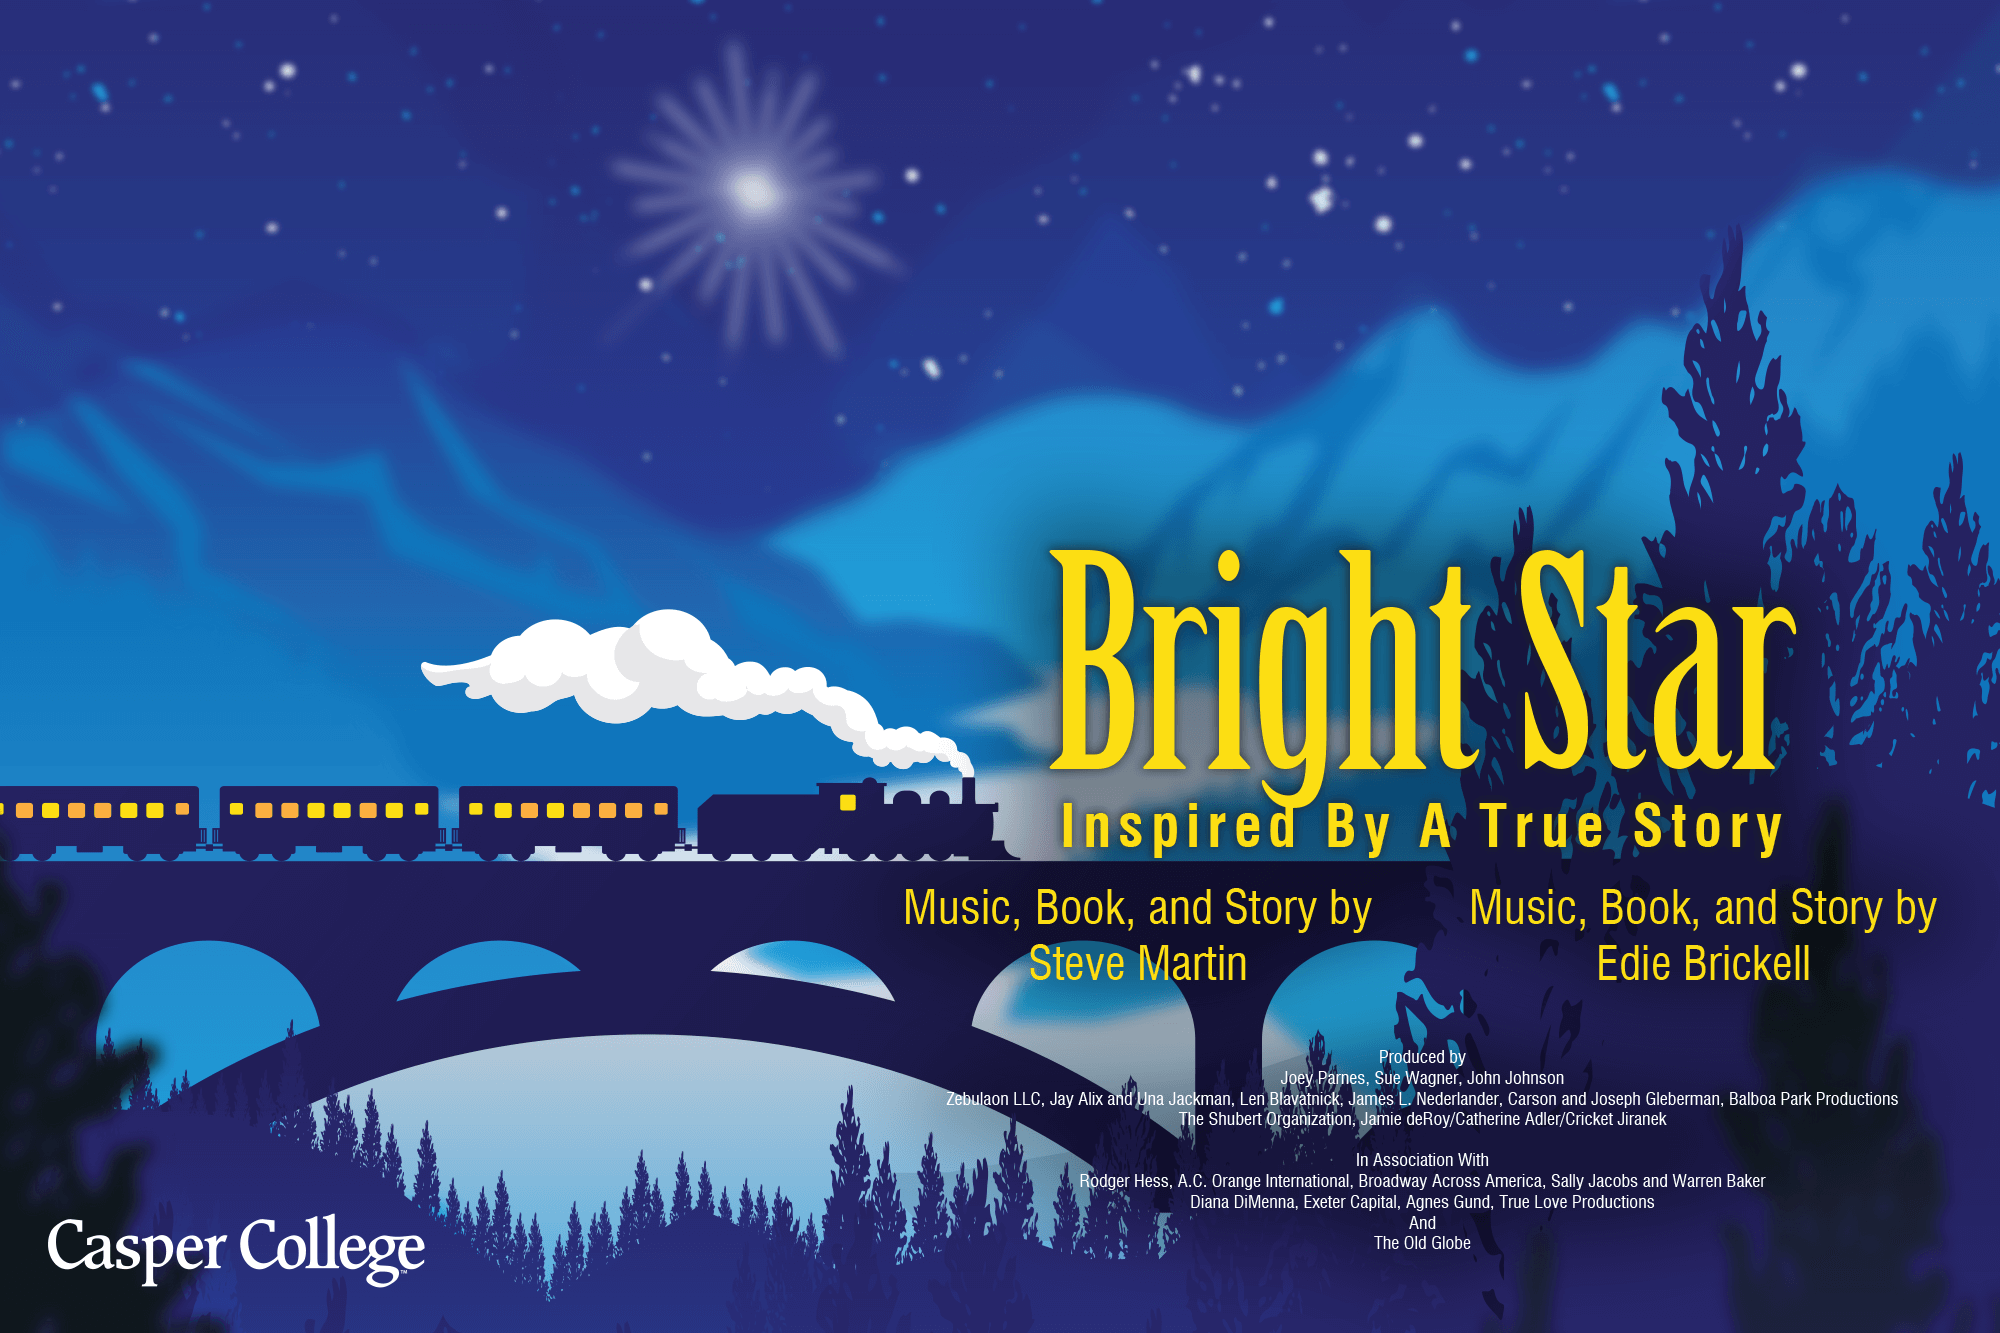 Image for Casper College musical "Bright Star."